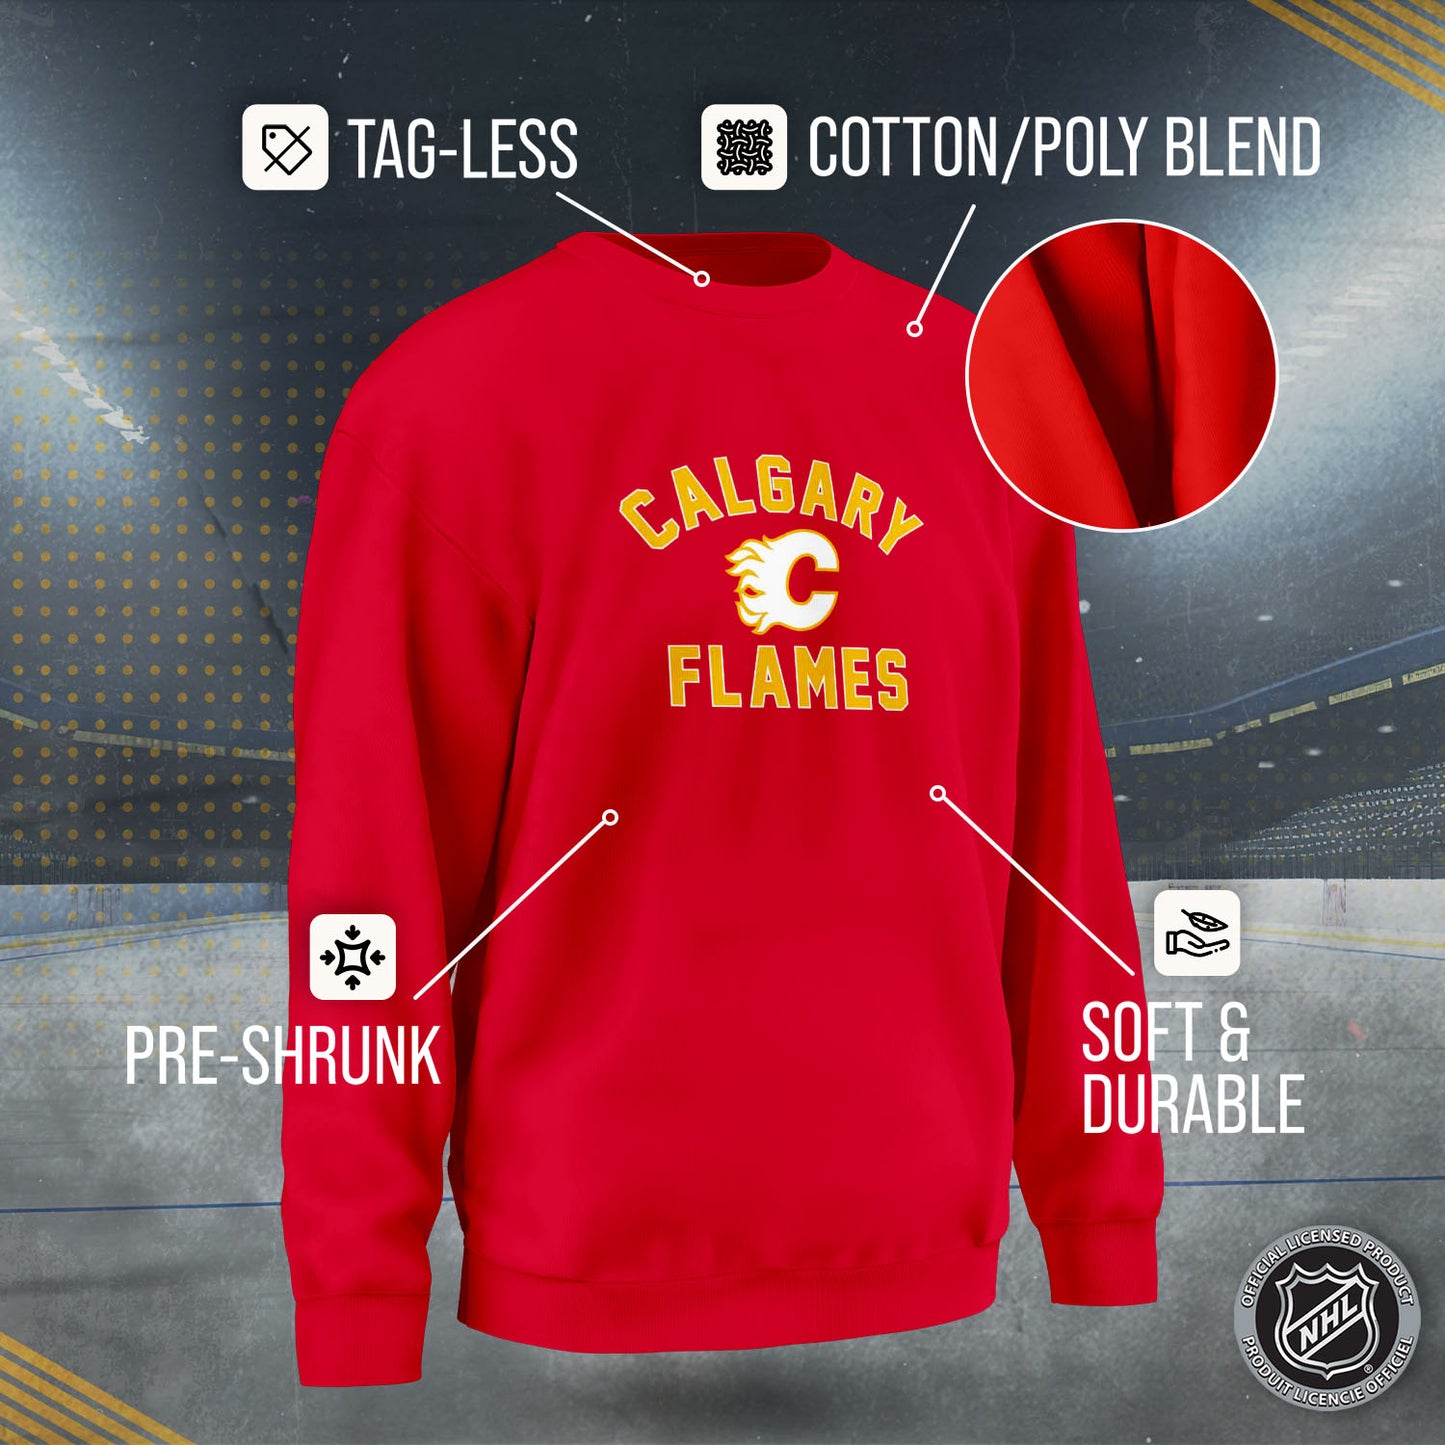 Calgary Flames Adult NHL Gameday Crewneck Sweatshirt - Red